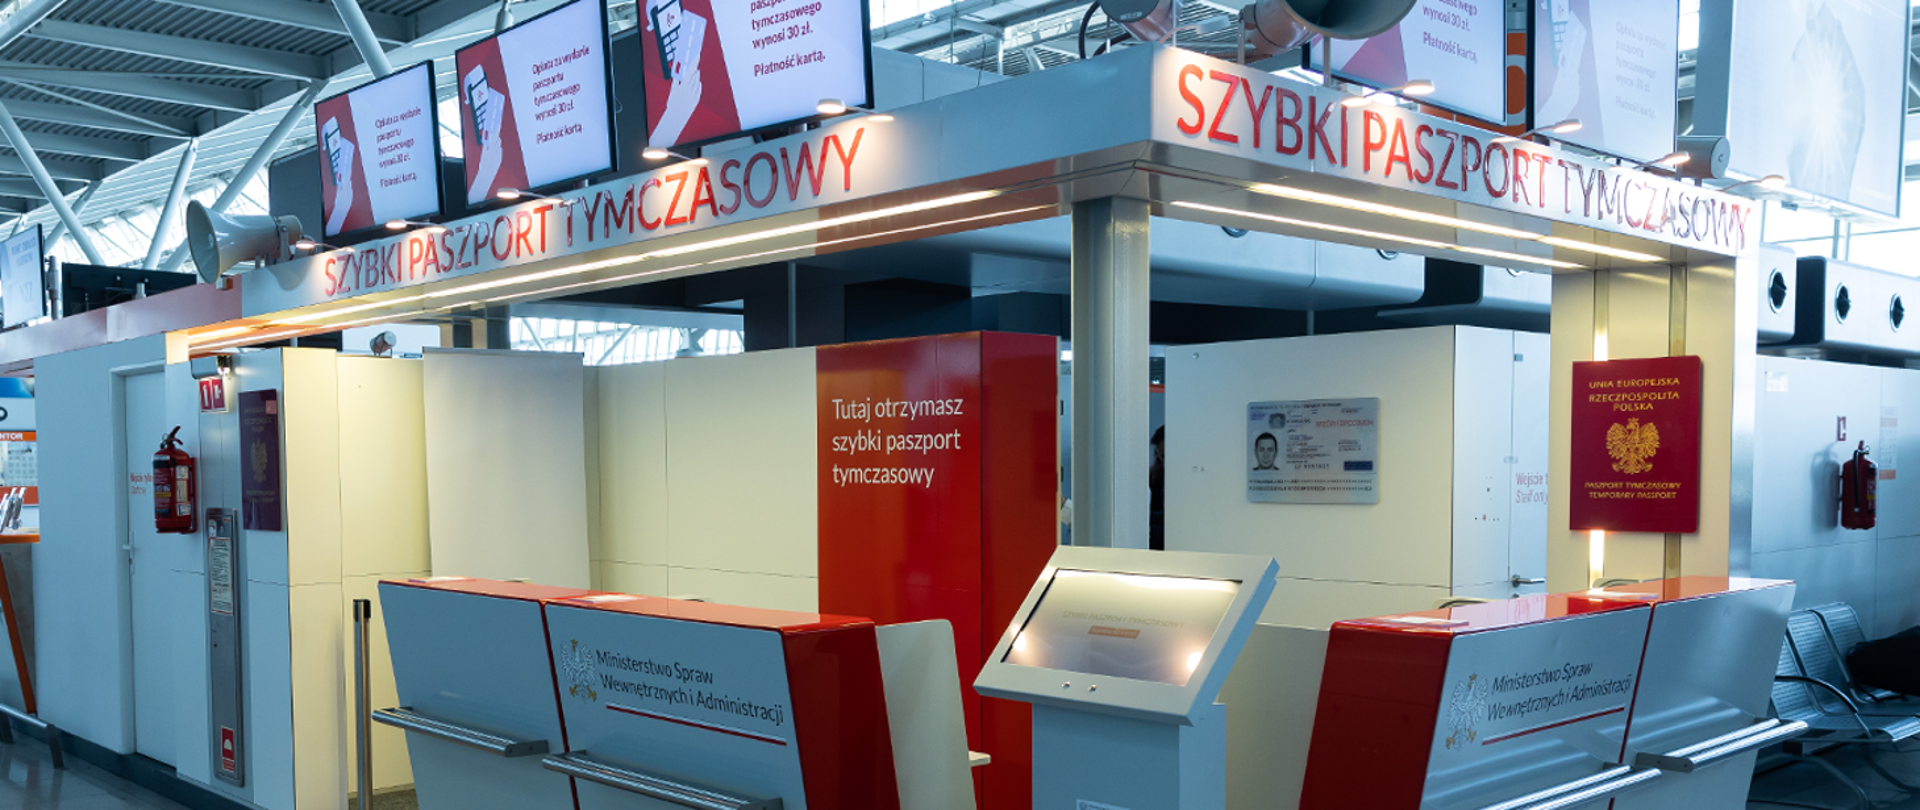 Passport Bureau at the Warsaw Chopin Airport.